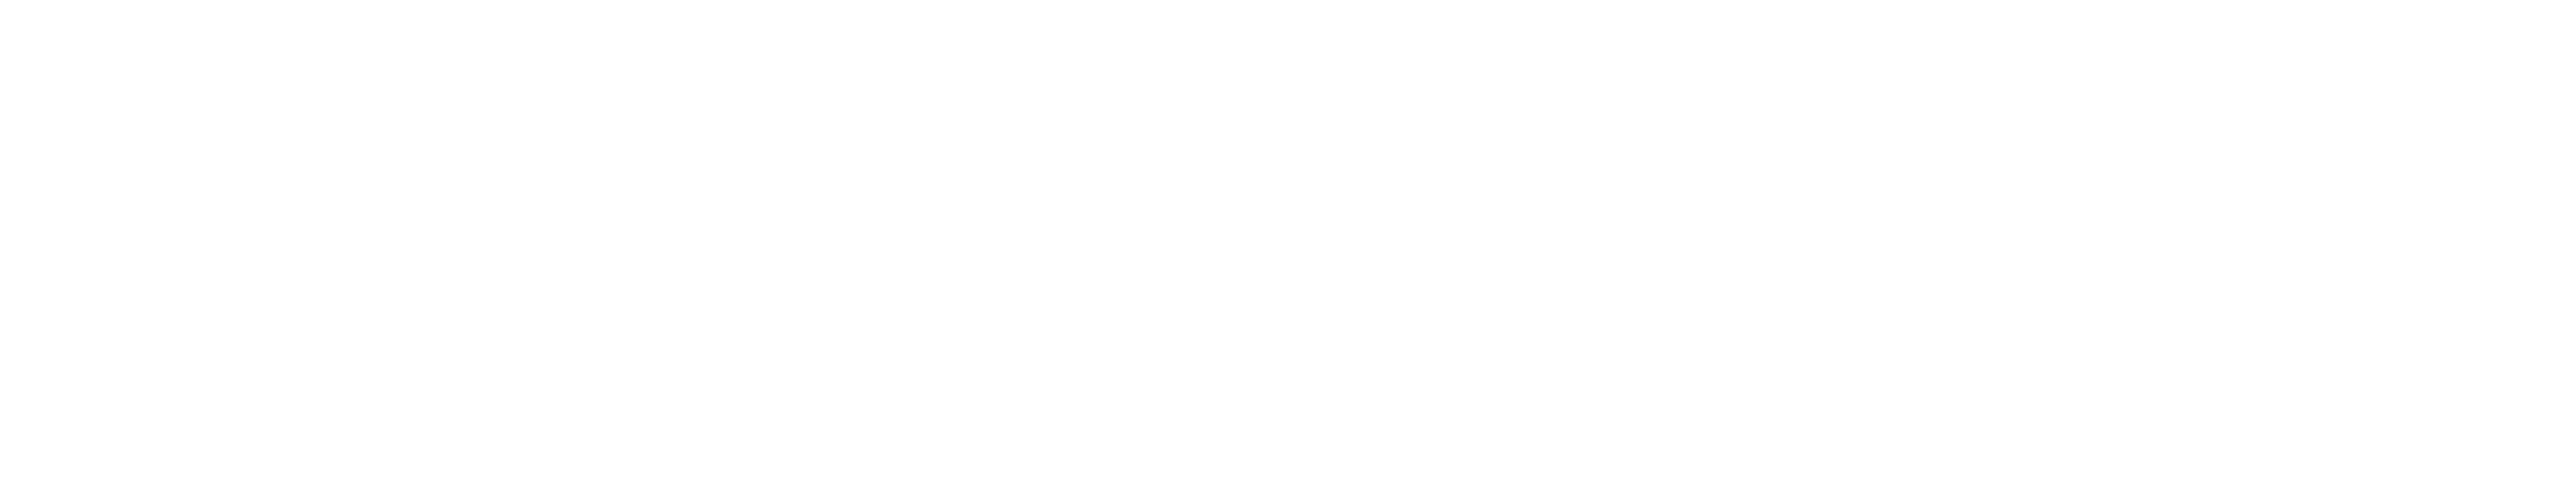 Propery Damage Appraisers Logo